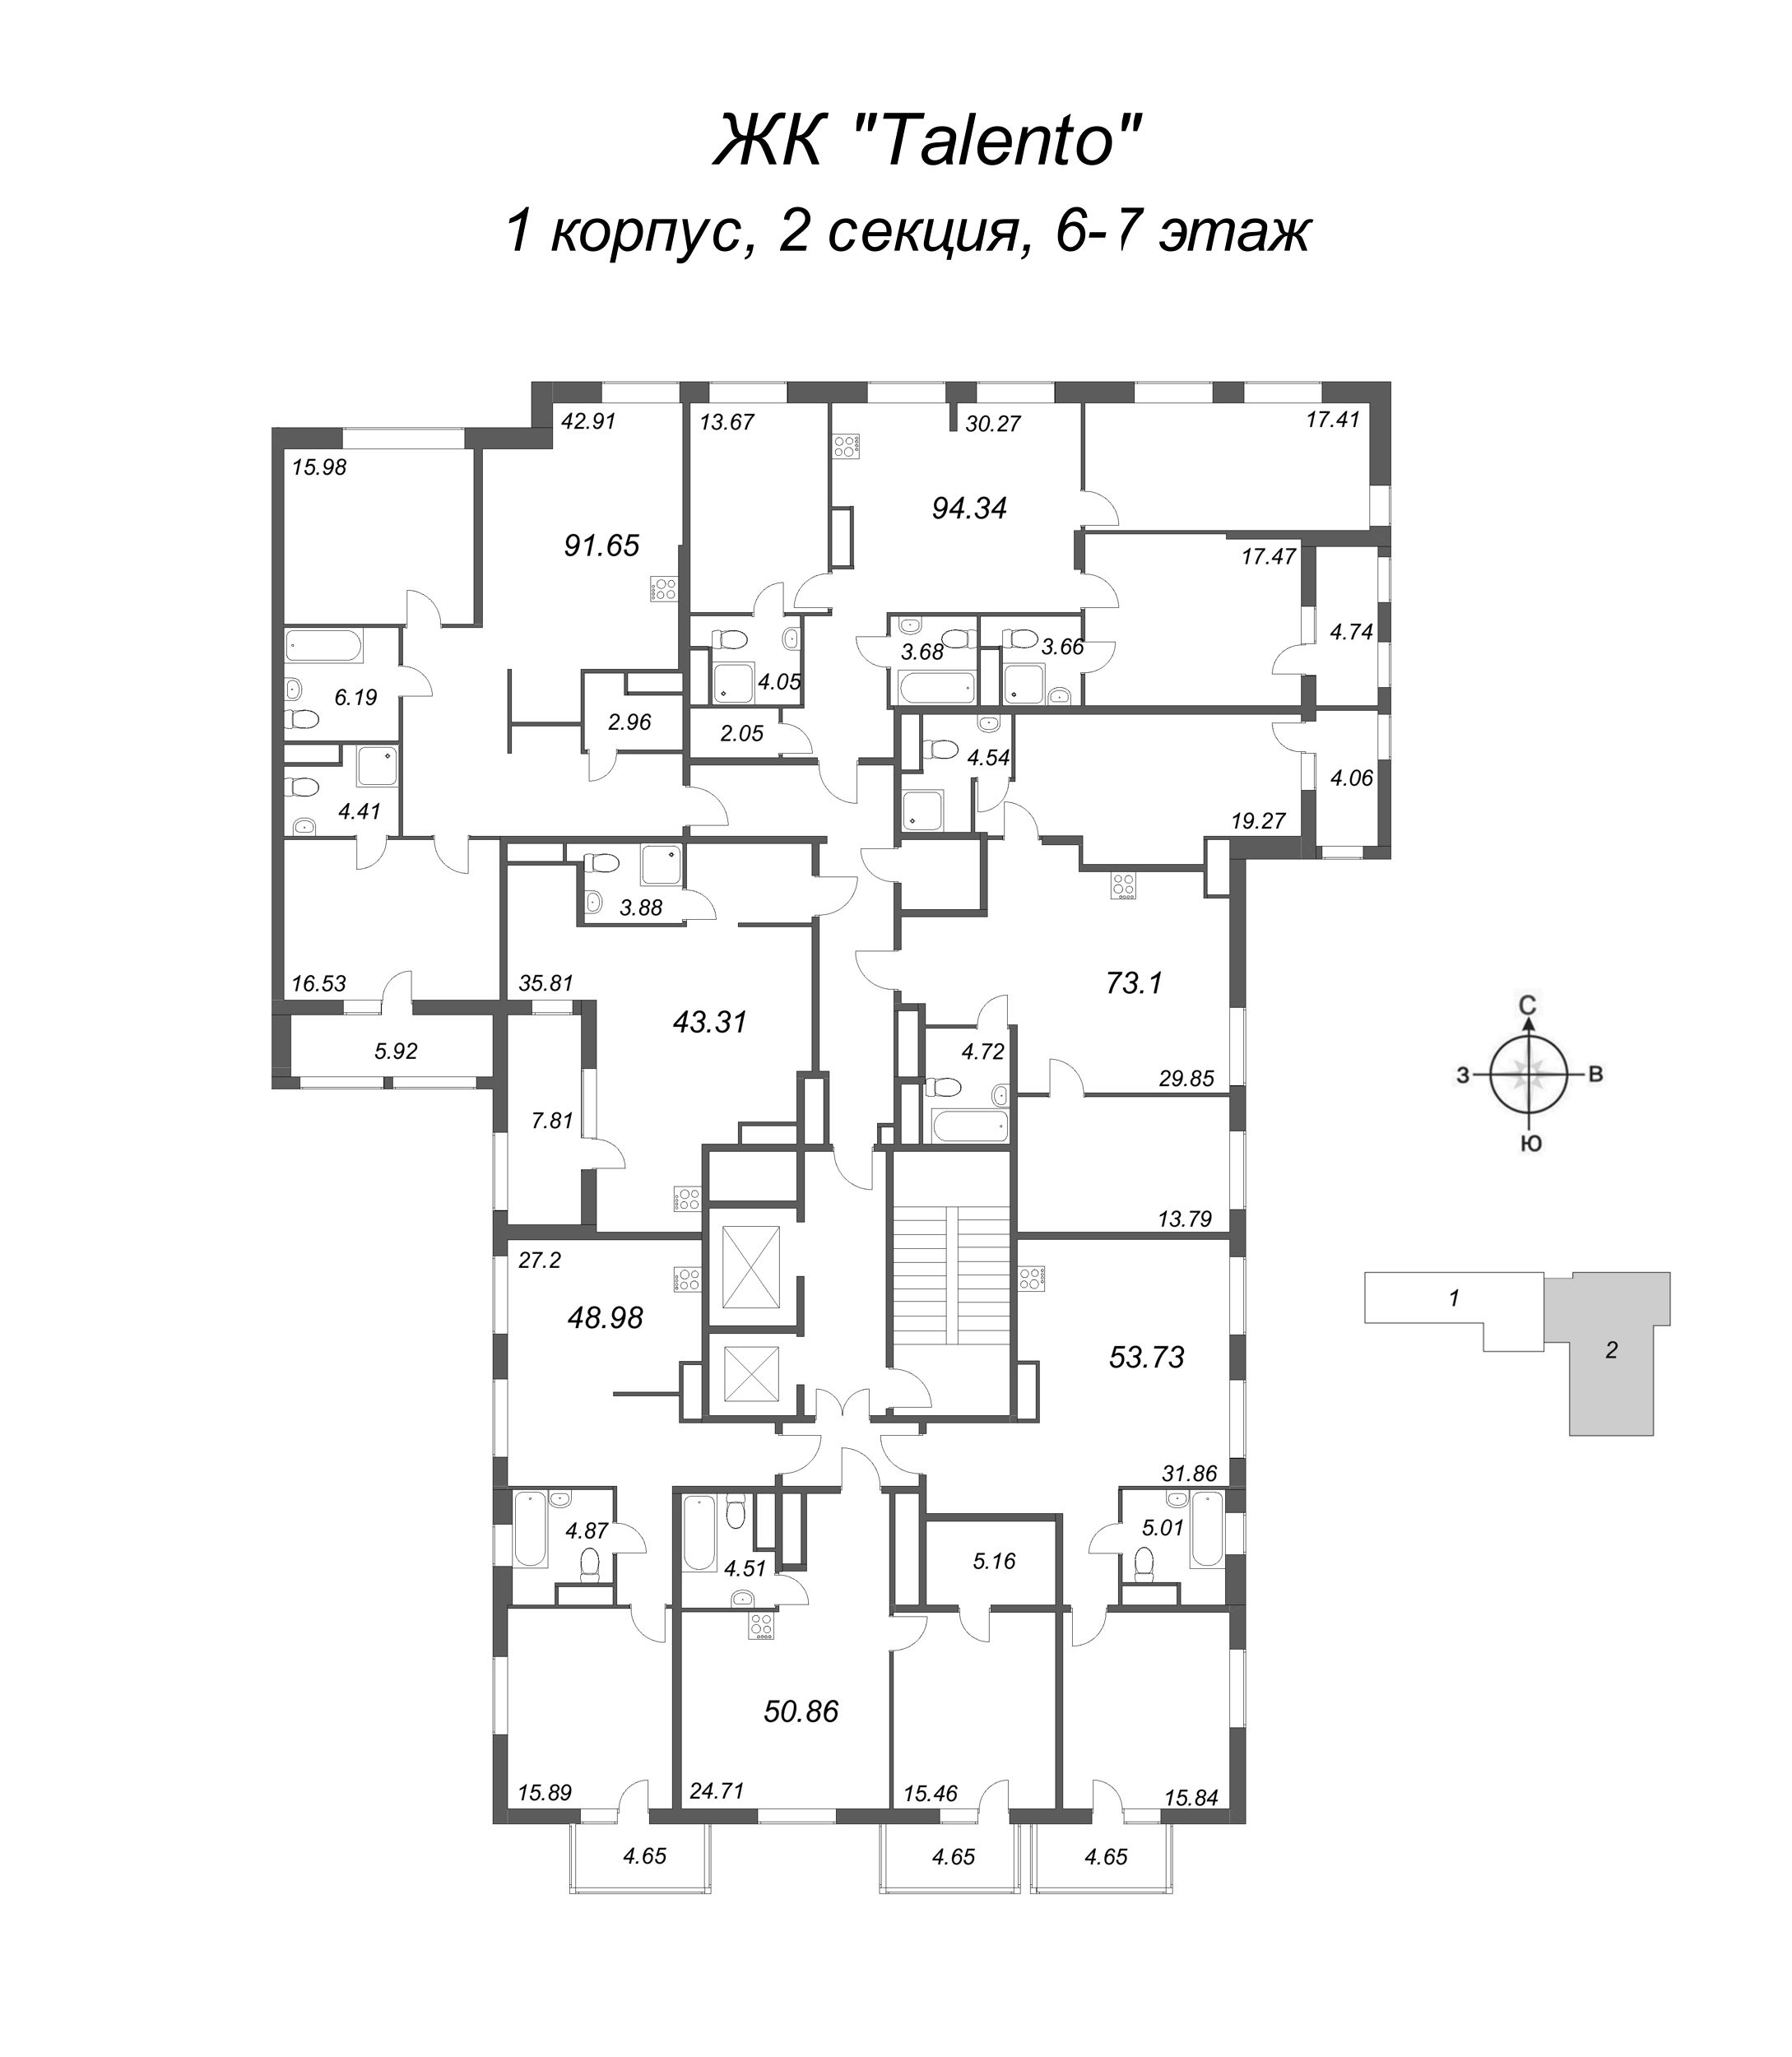 2-комнатная (Евро) квартира, 50.86 м² - планировка этажа